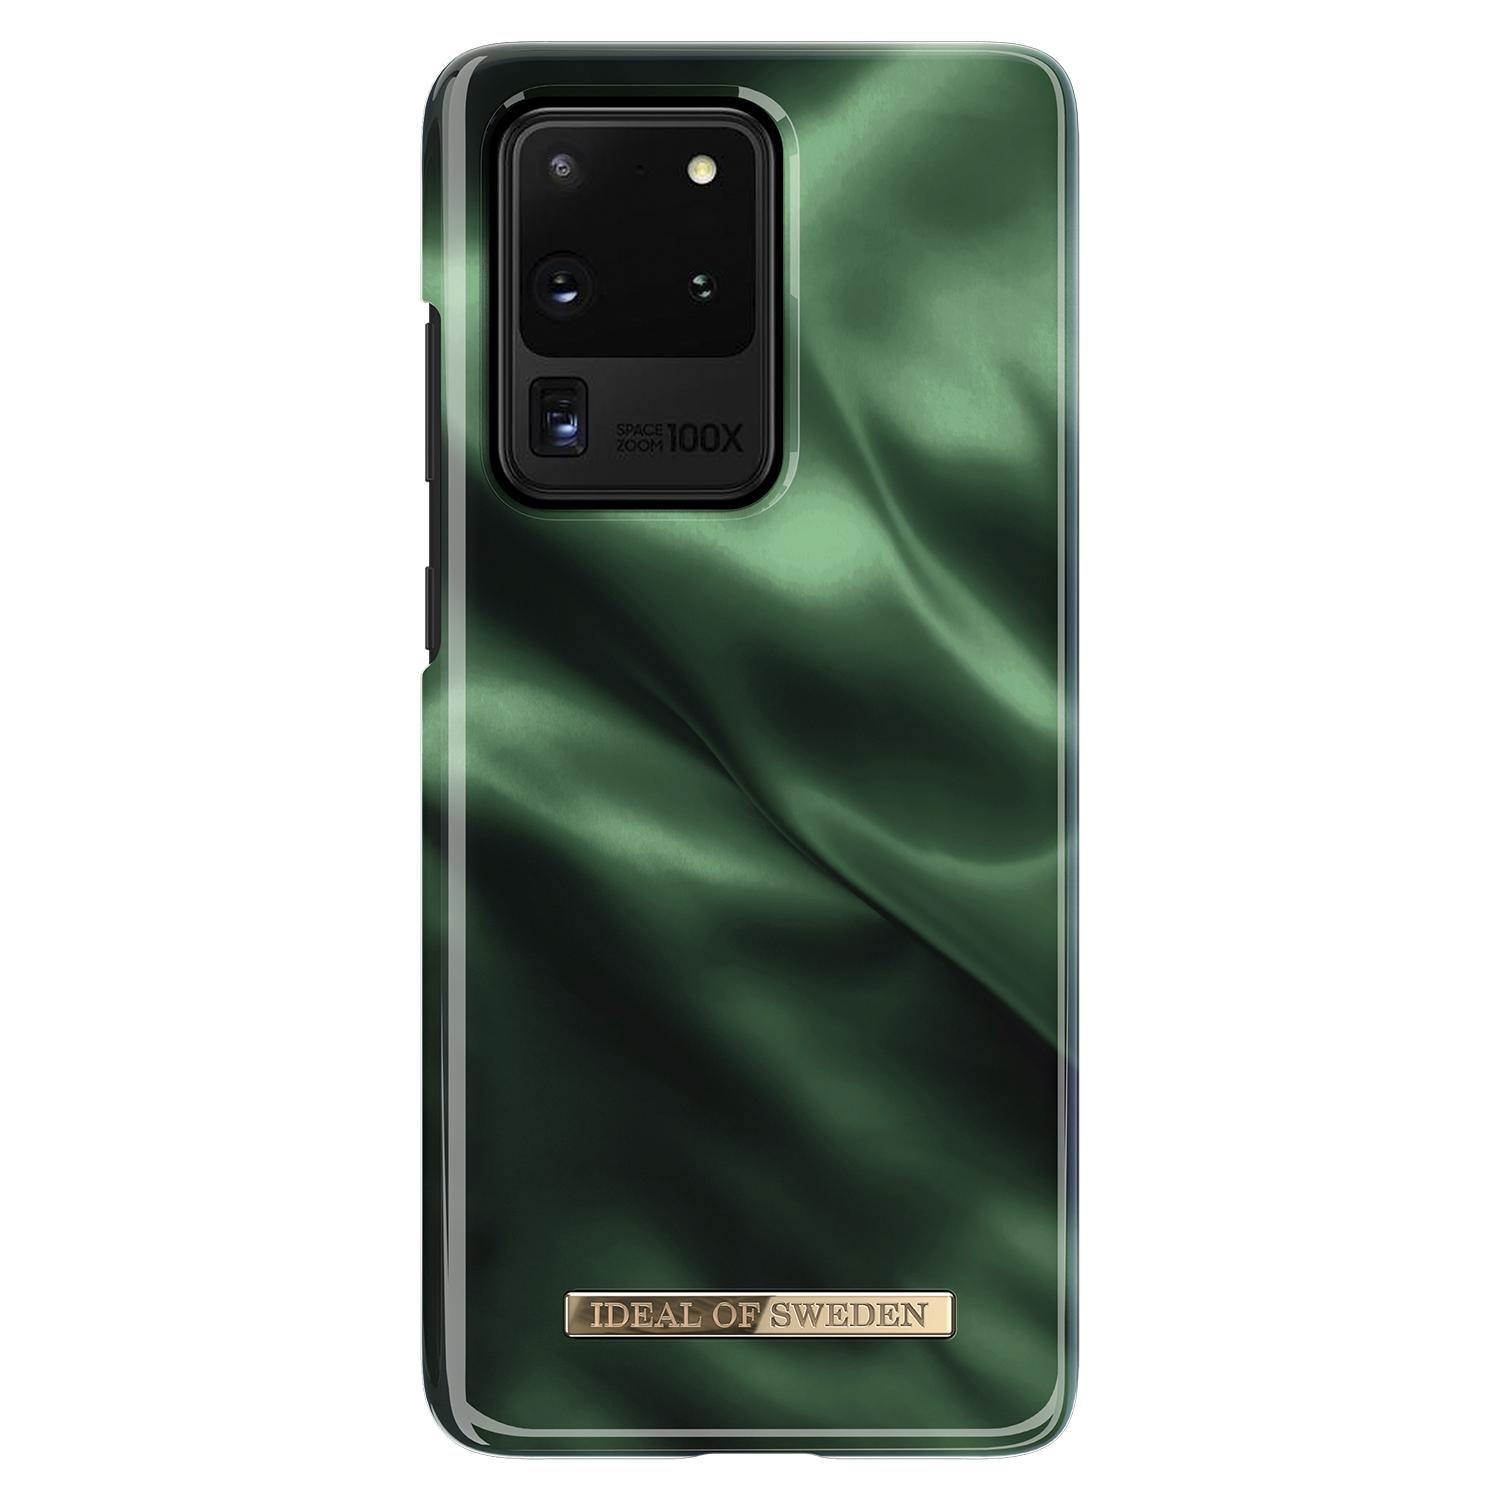 Fashion Case Galaxy S20 Ultra Emerald Satin